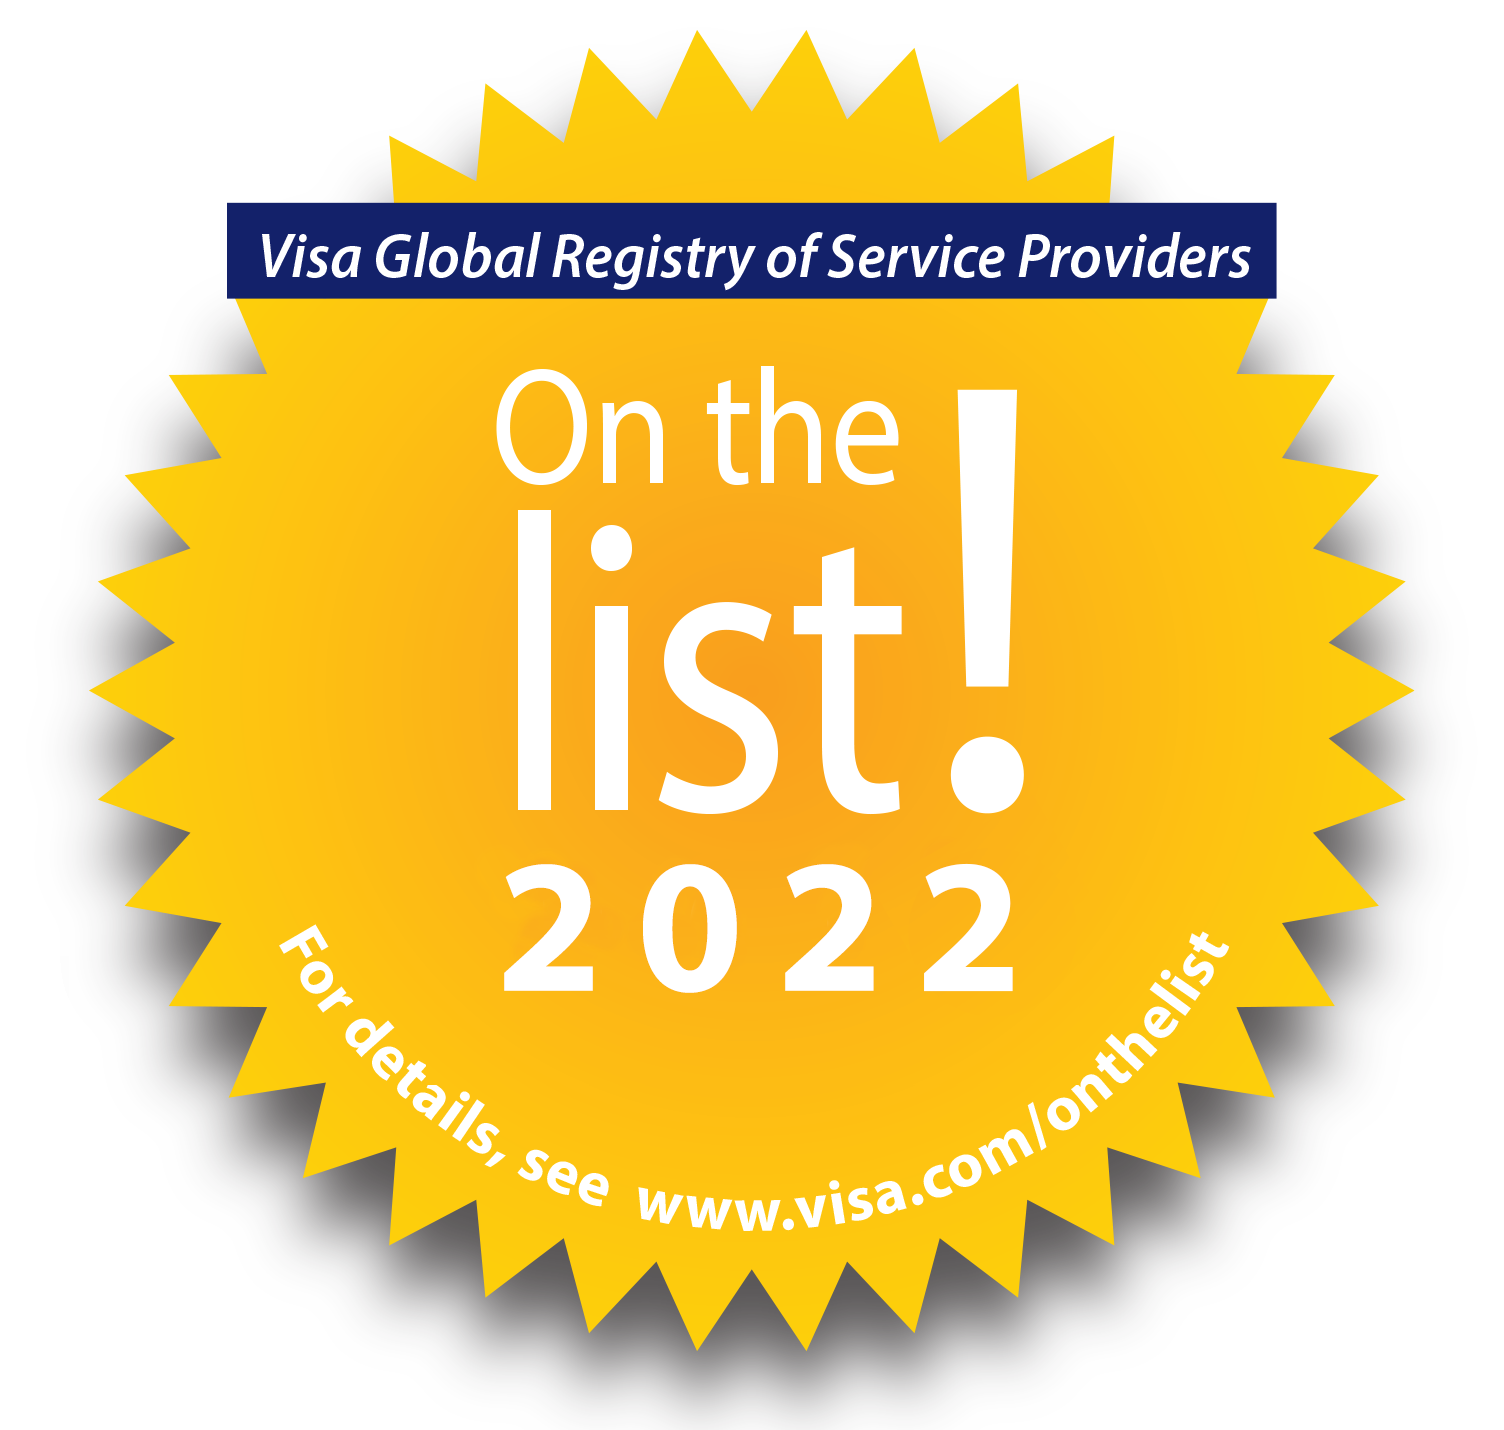 visa global registry of service providers badge